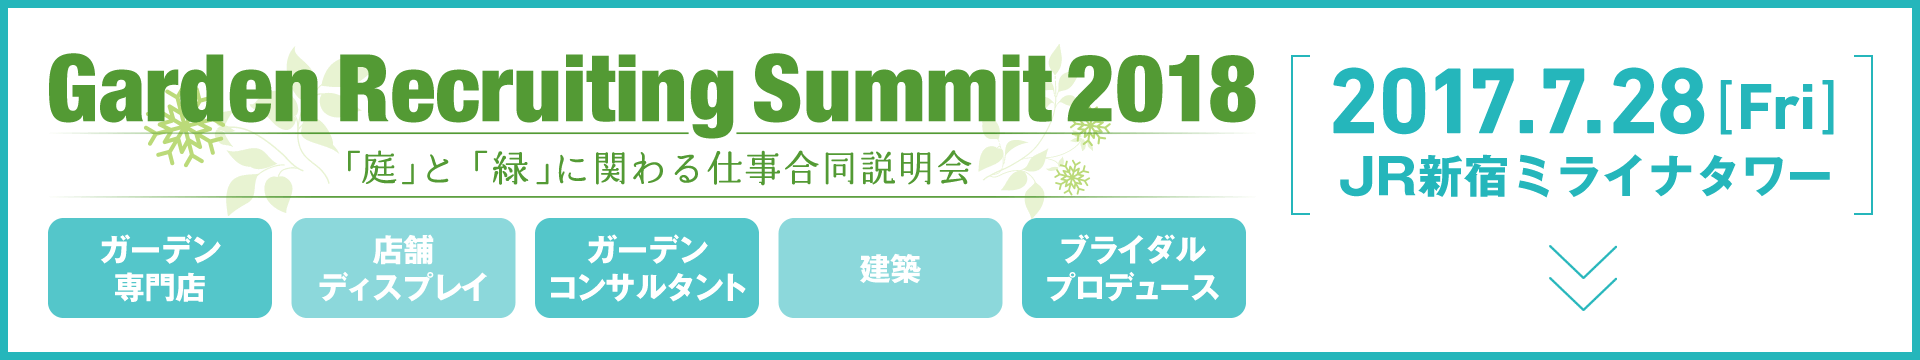 Garden Recruiting Summit 2018 2017.7.28[Fri] 「庭」と「緑」に関わる仕事合同説明会 JR新宿ミライナタワー